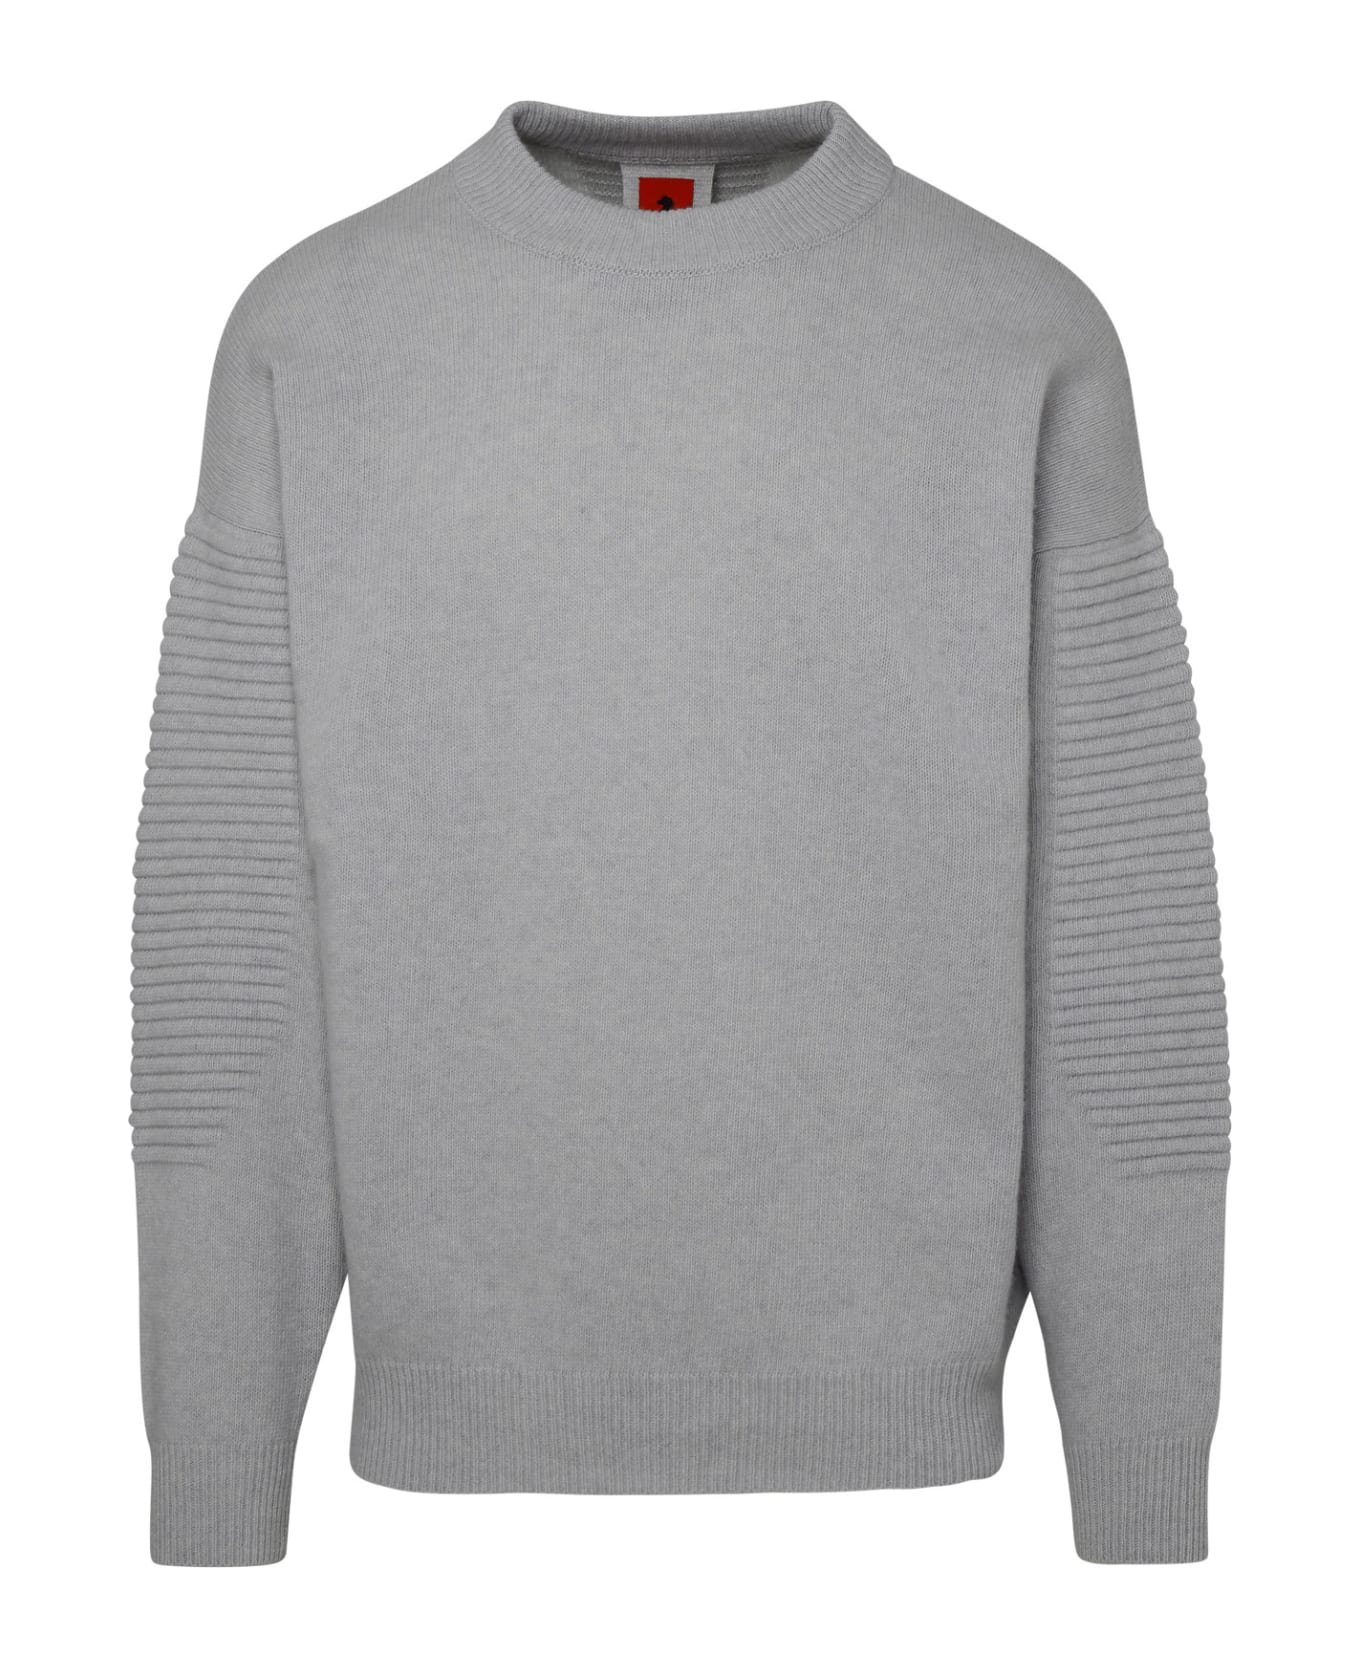 Ferrari Grey Cashmere Blend Sweater - Grey ニットウェア